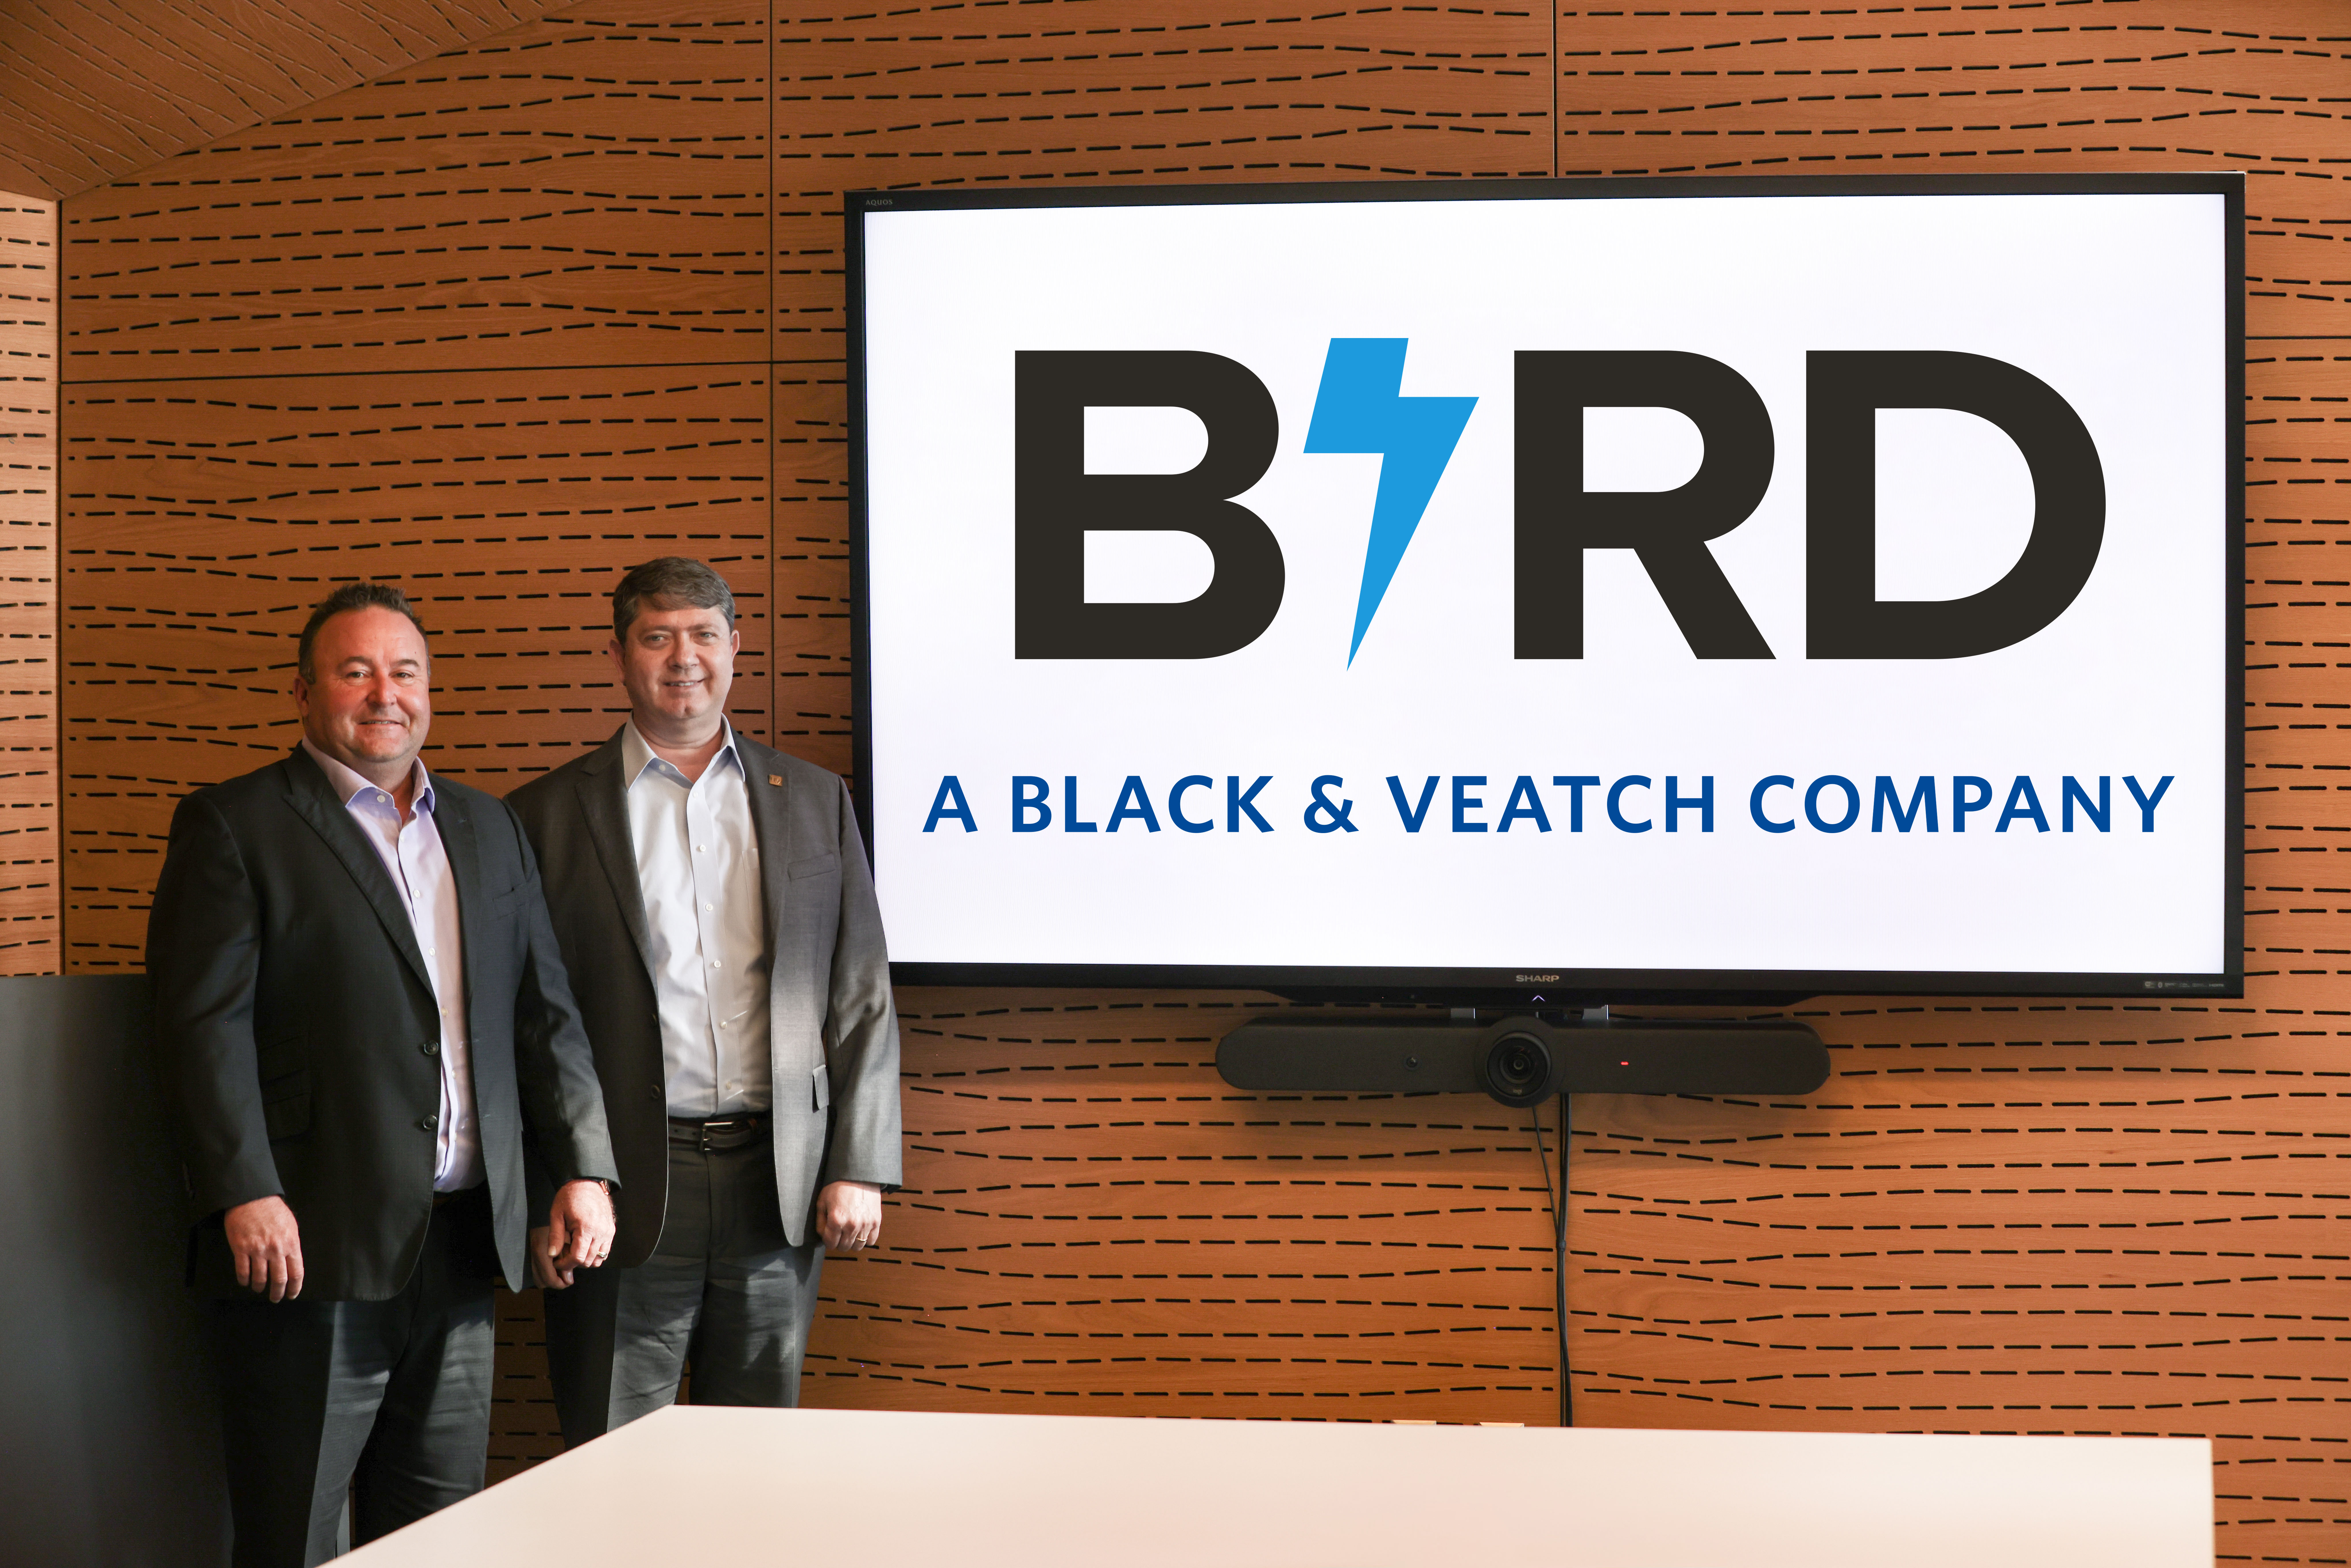 Black & Veatch Aquires Bird Electric 